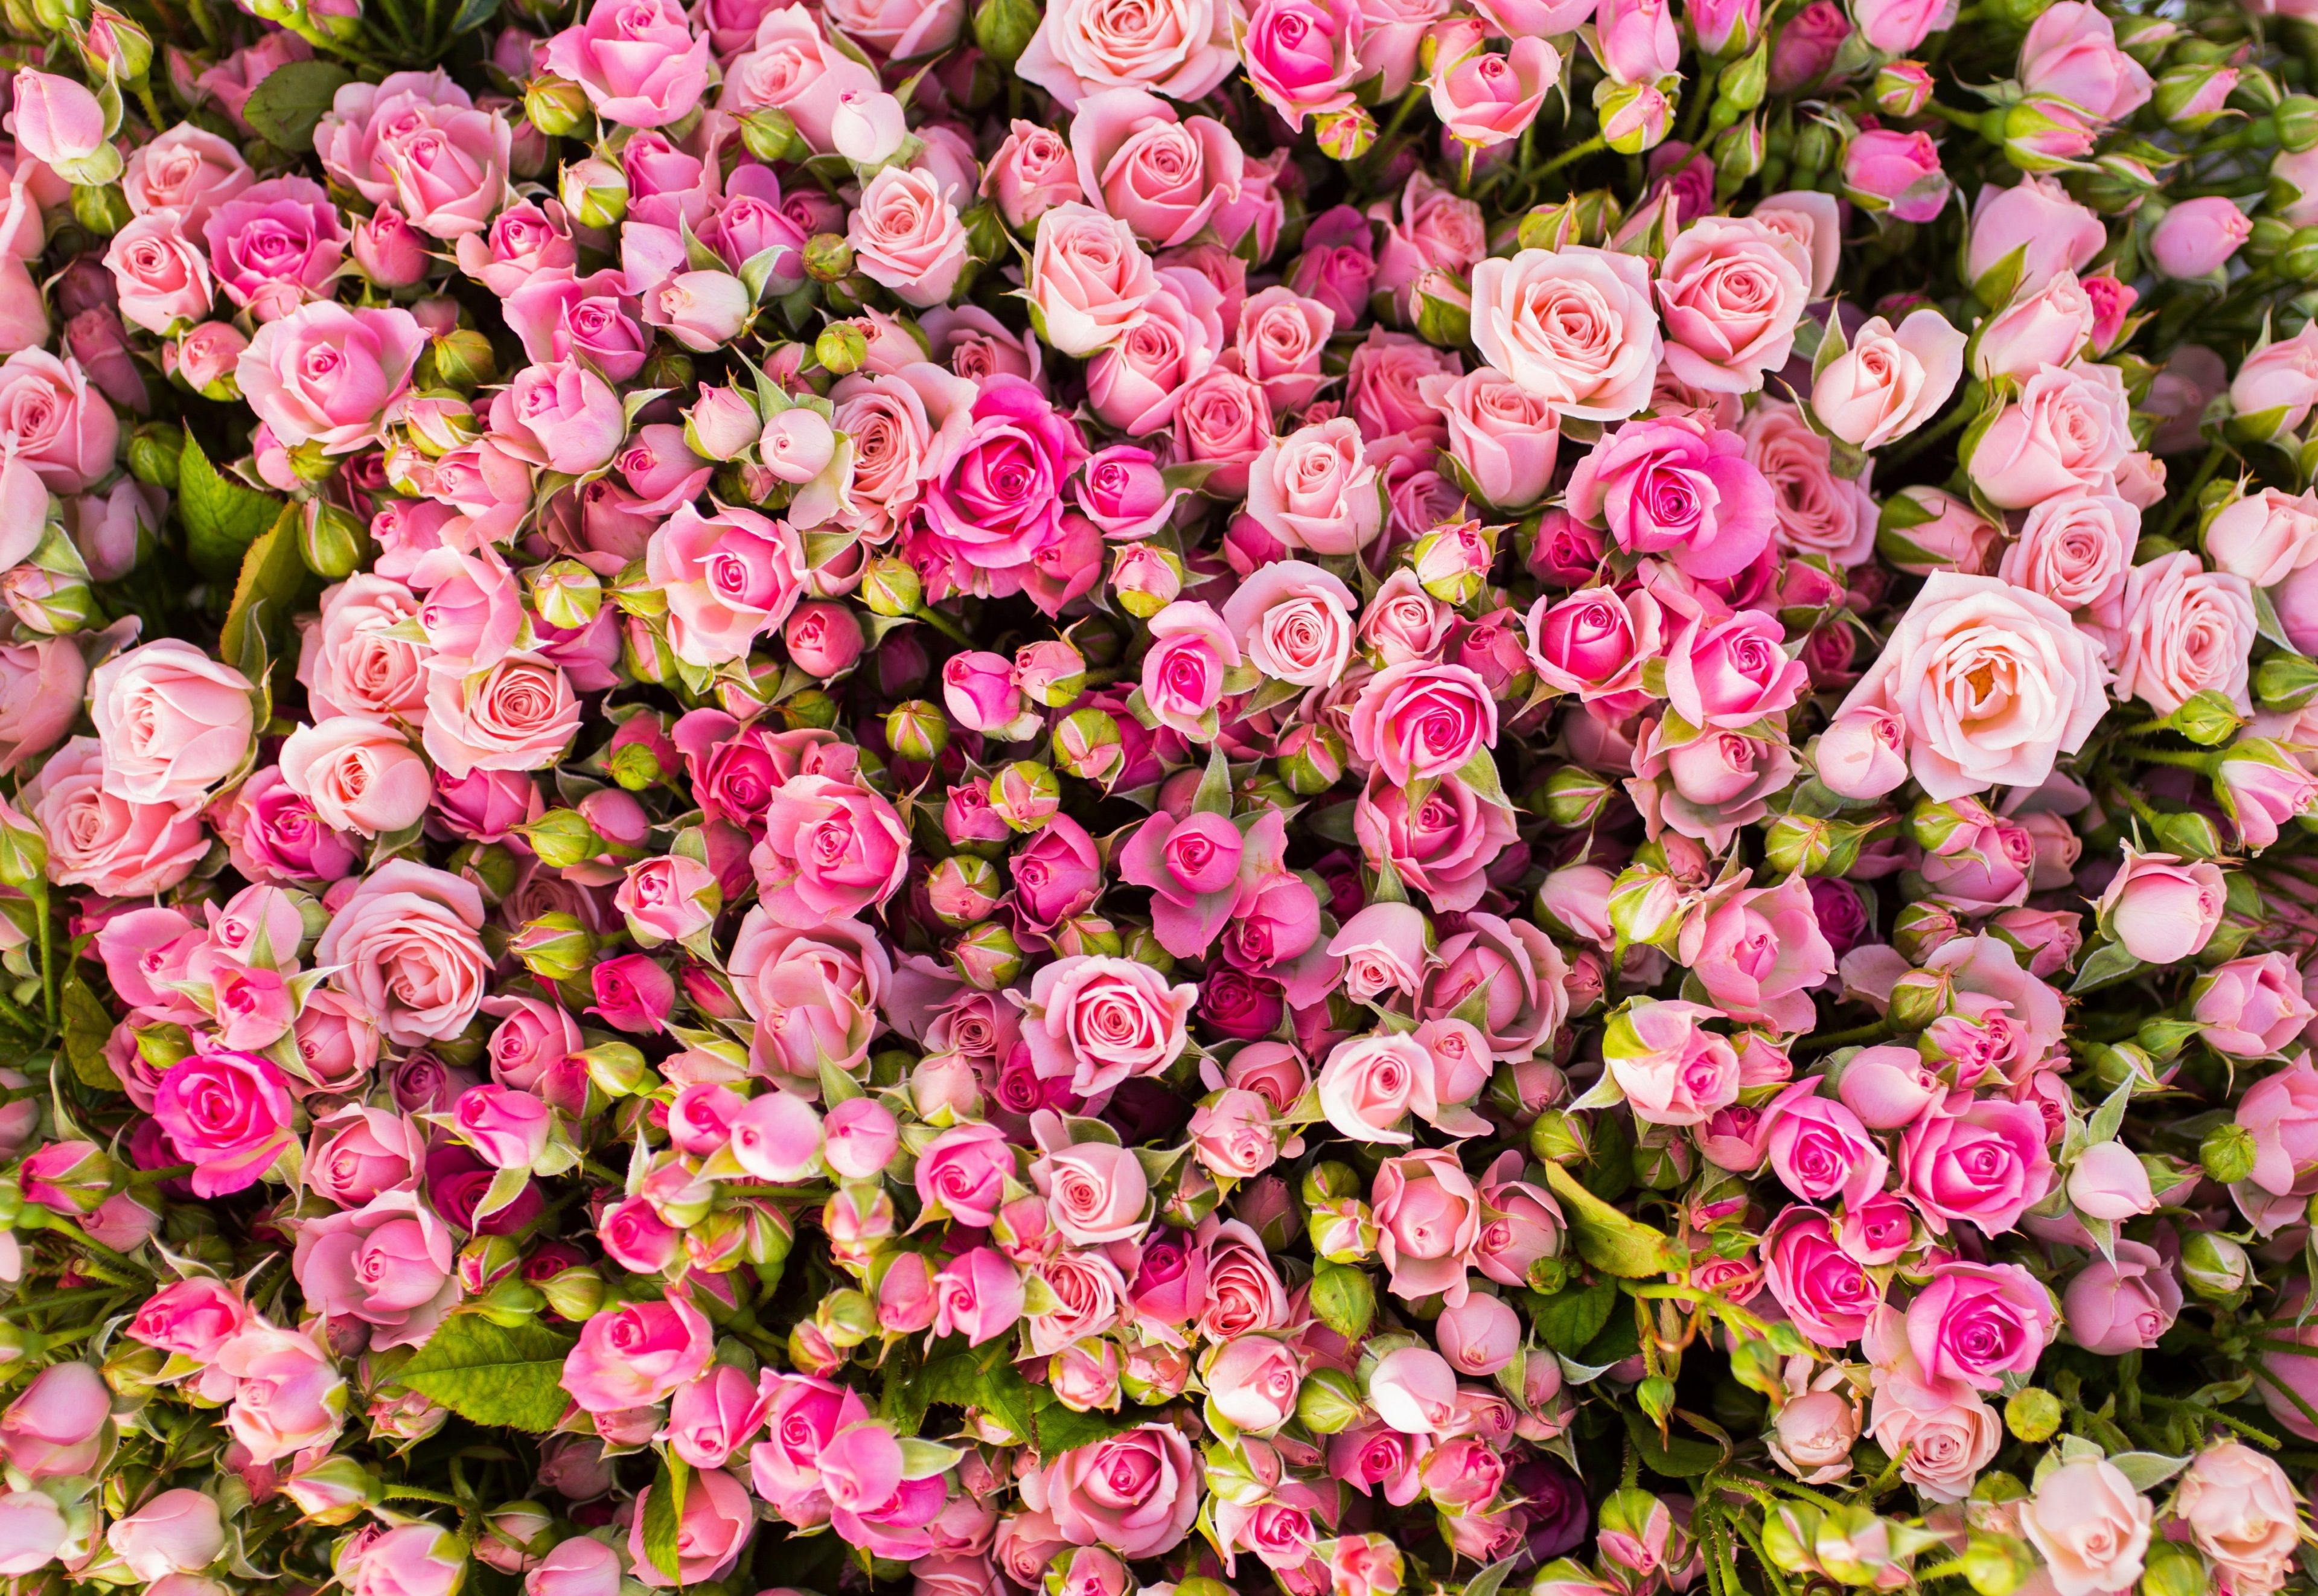 pink roses 4k download HD pc wallpaper. Rose wallpaper, Abstract wallpaper background, Pink roses